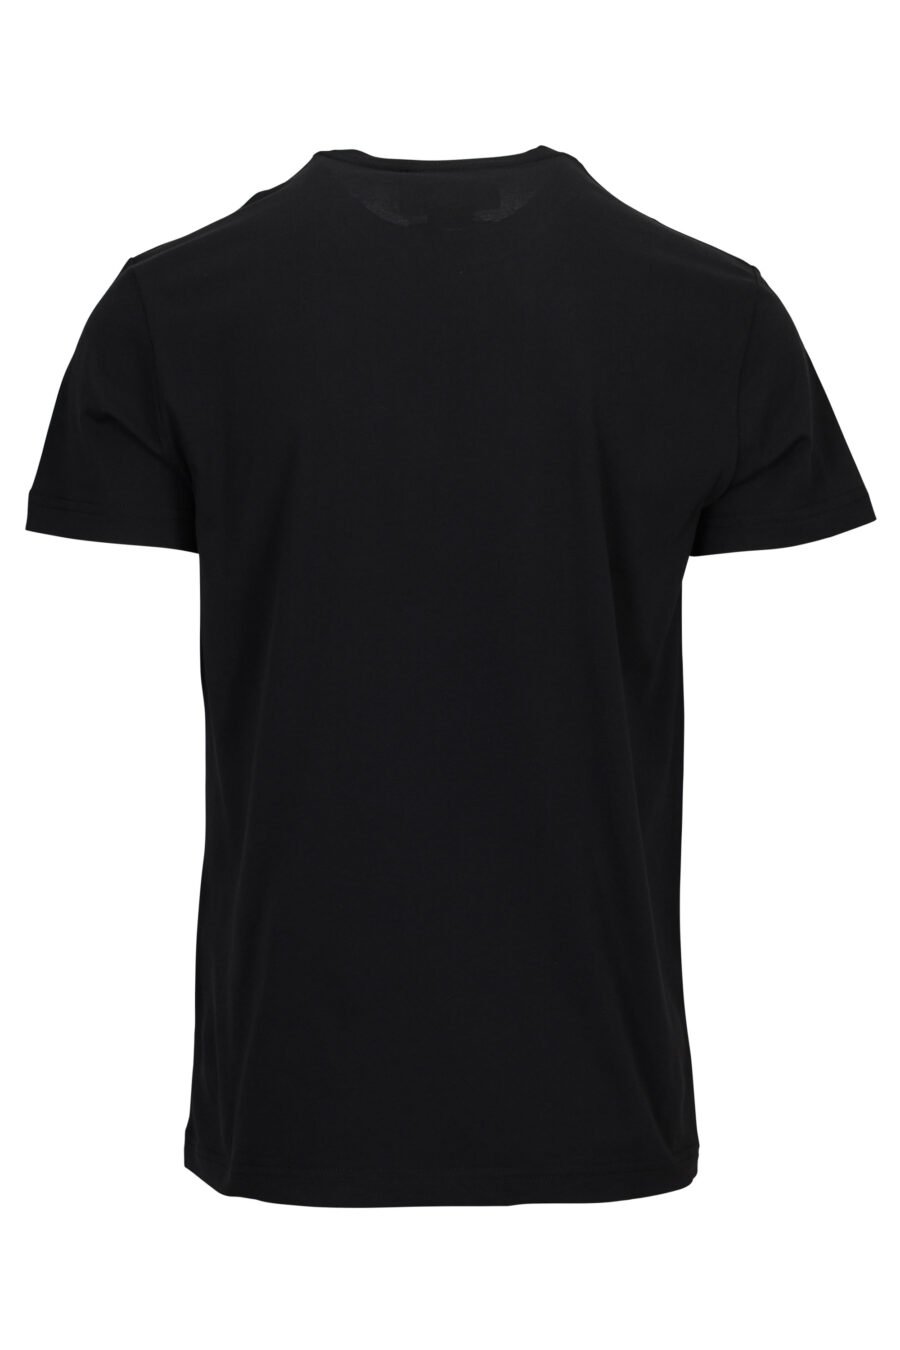 Camiseta negra con maxilogo barroco acuarela - 8052019589535 1